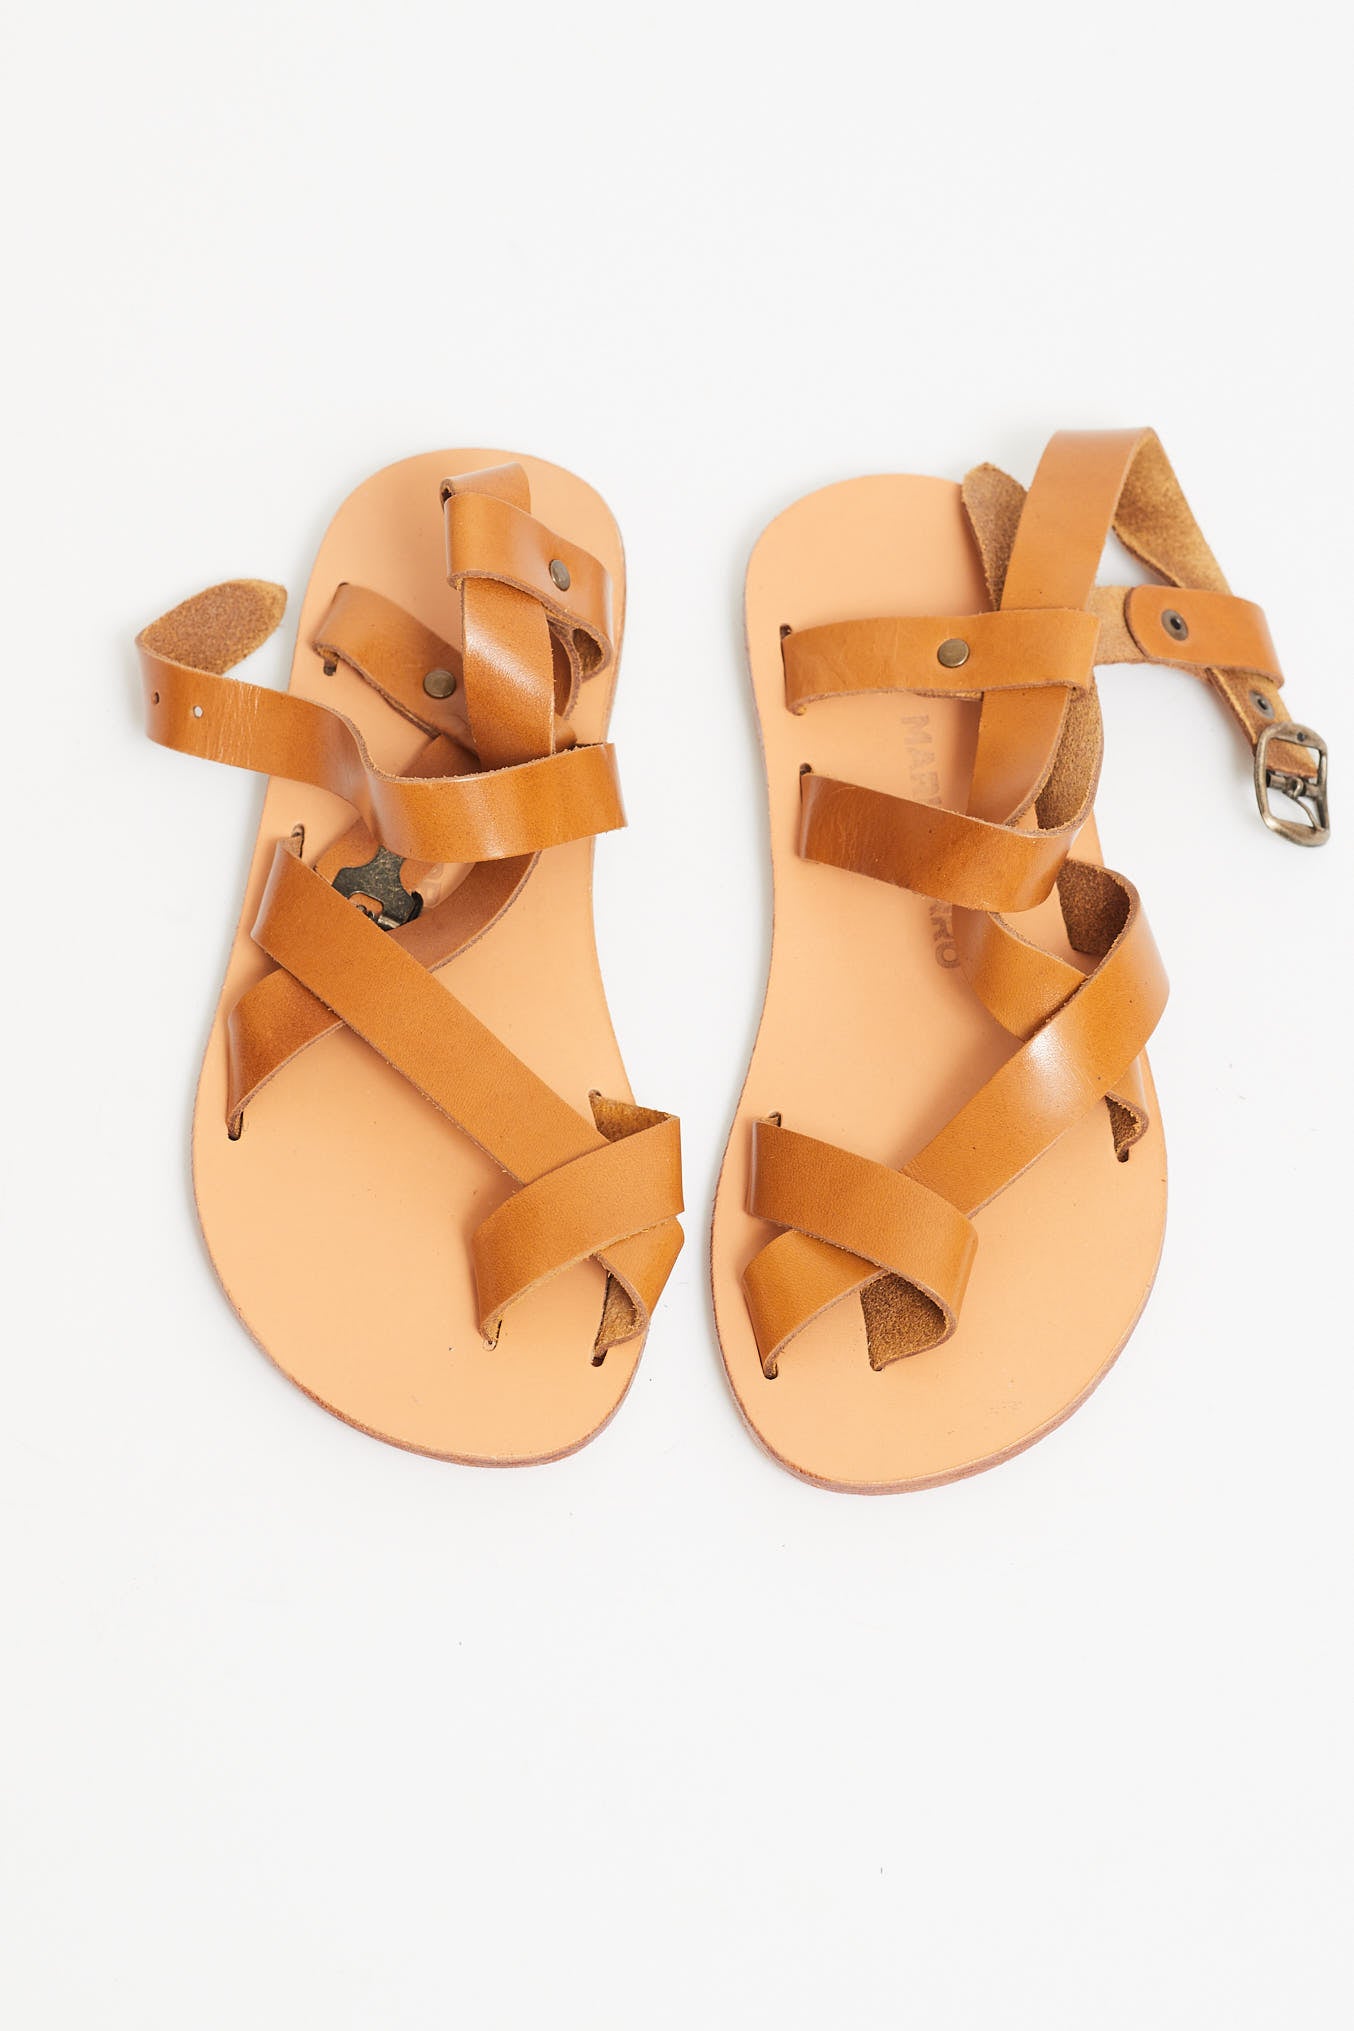 SAMPLE — Lera Sandals- caramel — Size 38